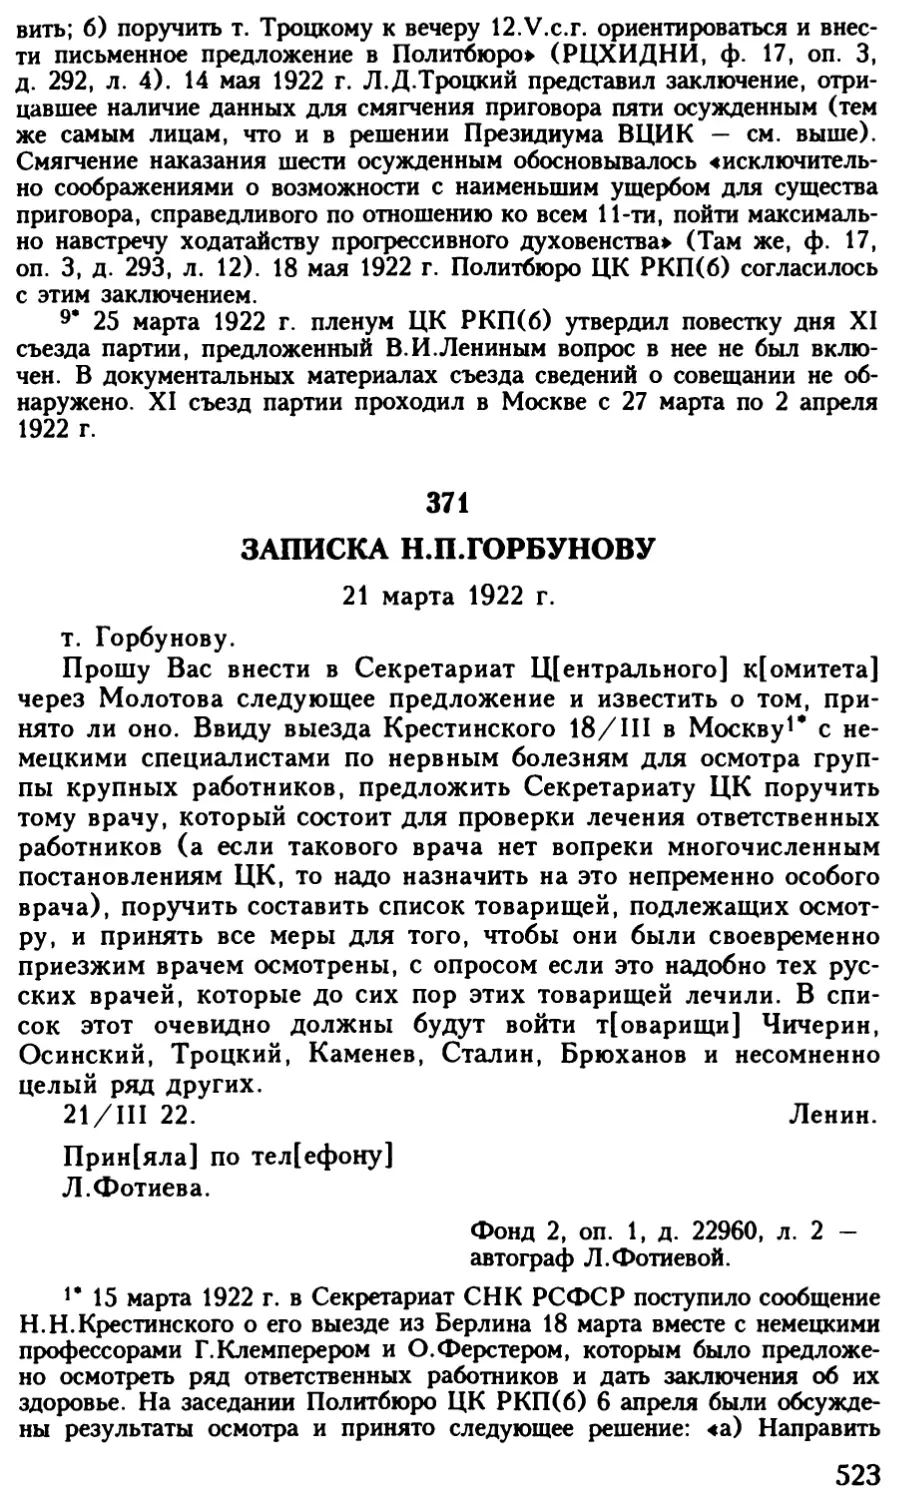 371. Записка Н.П.Горбунову. 21 марта 1922 г